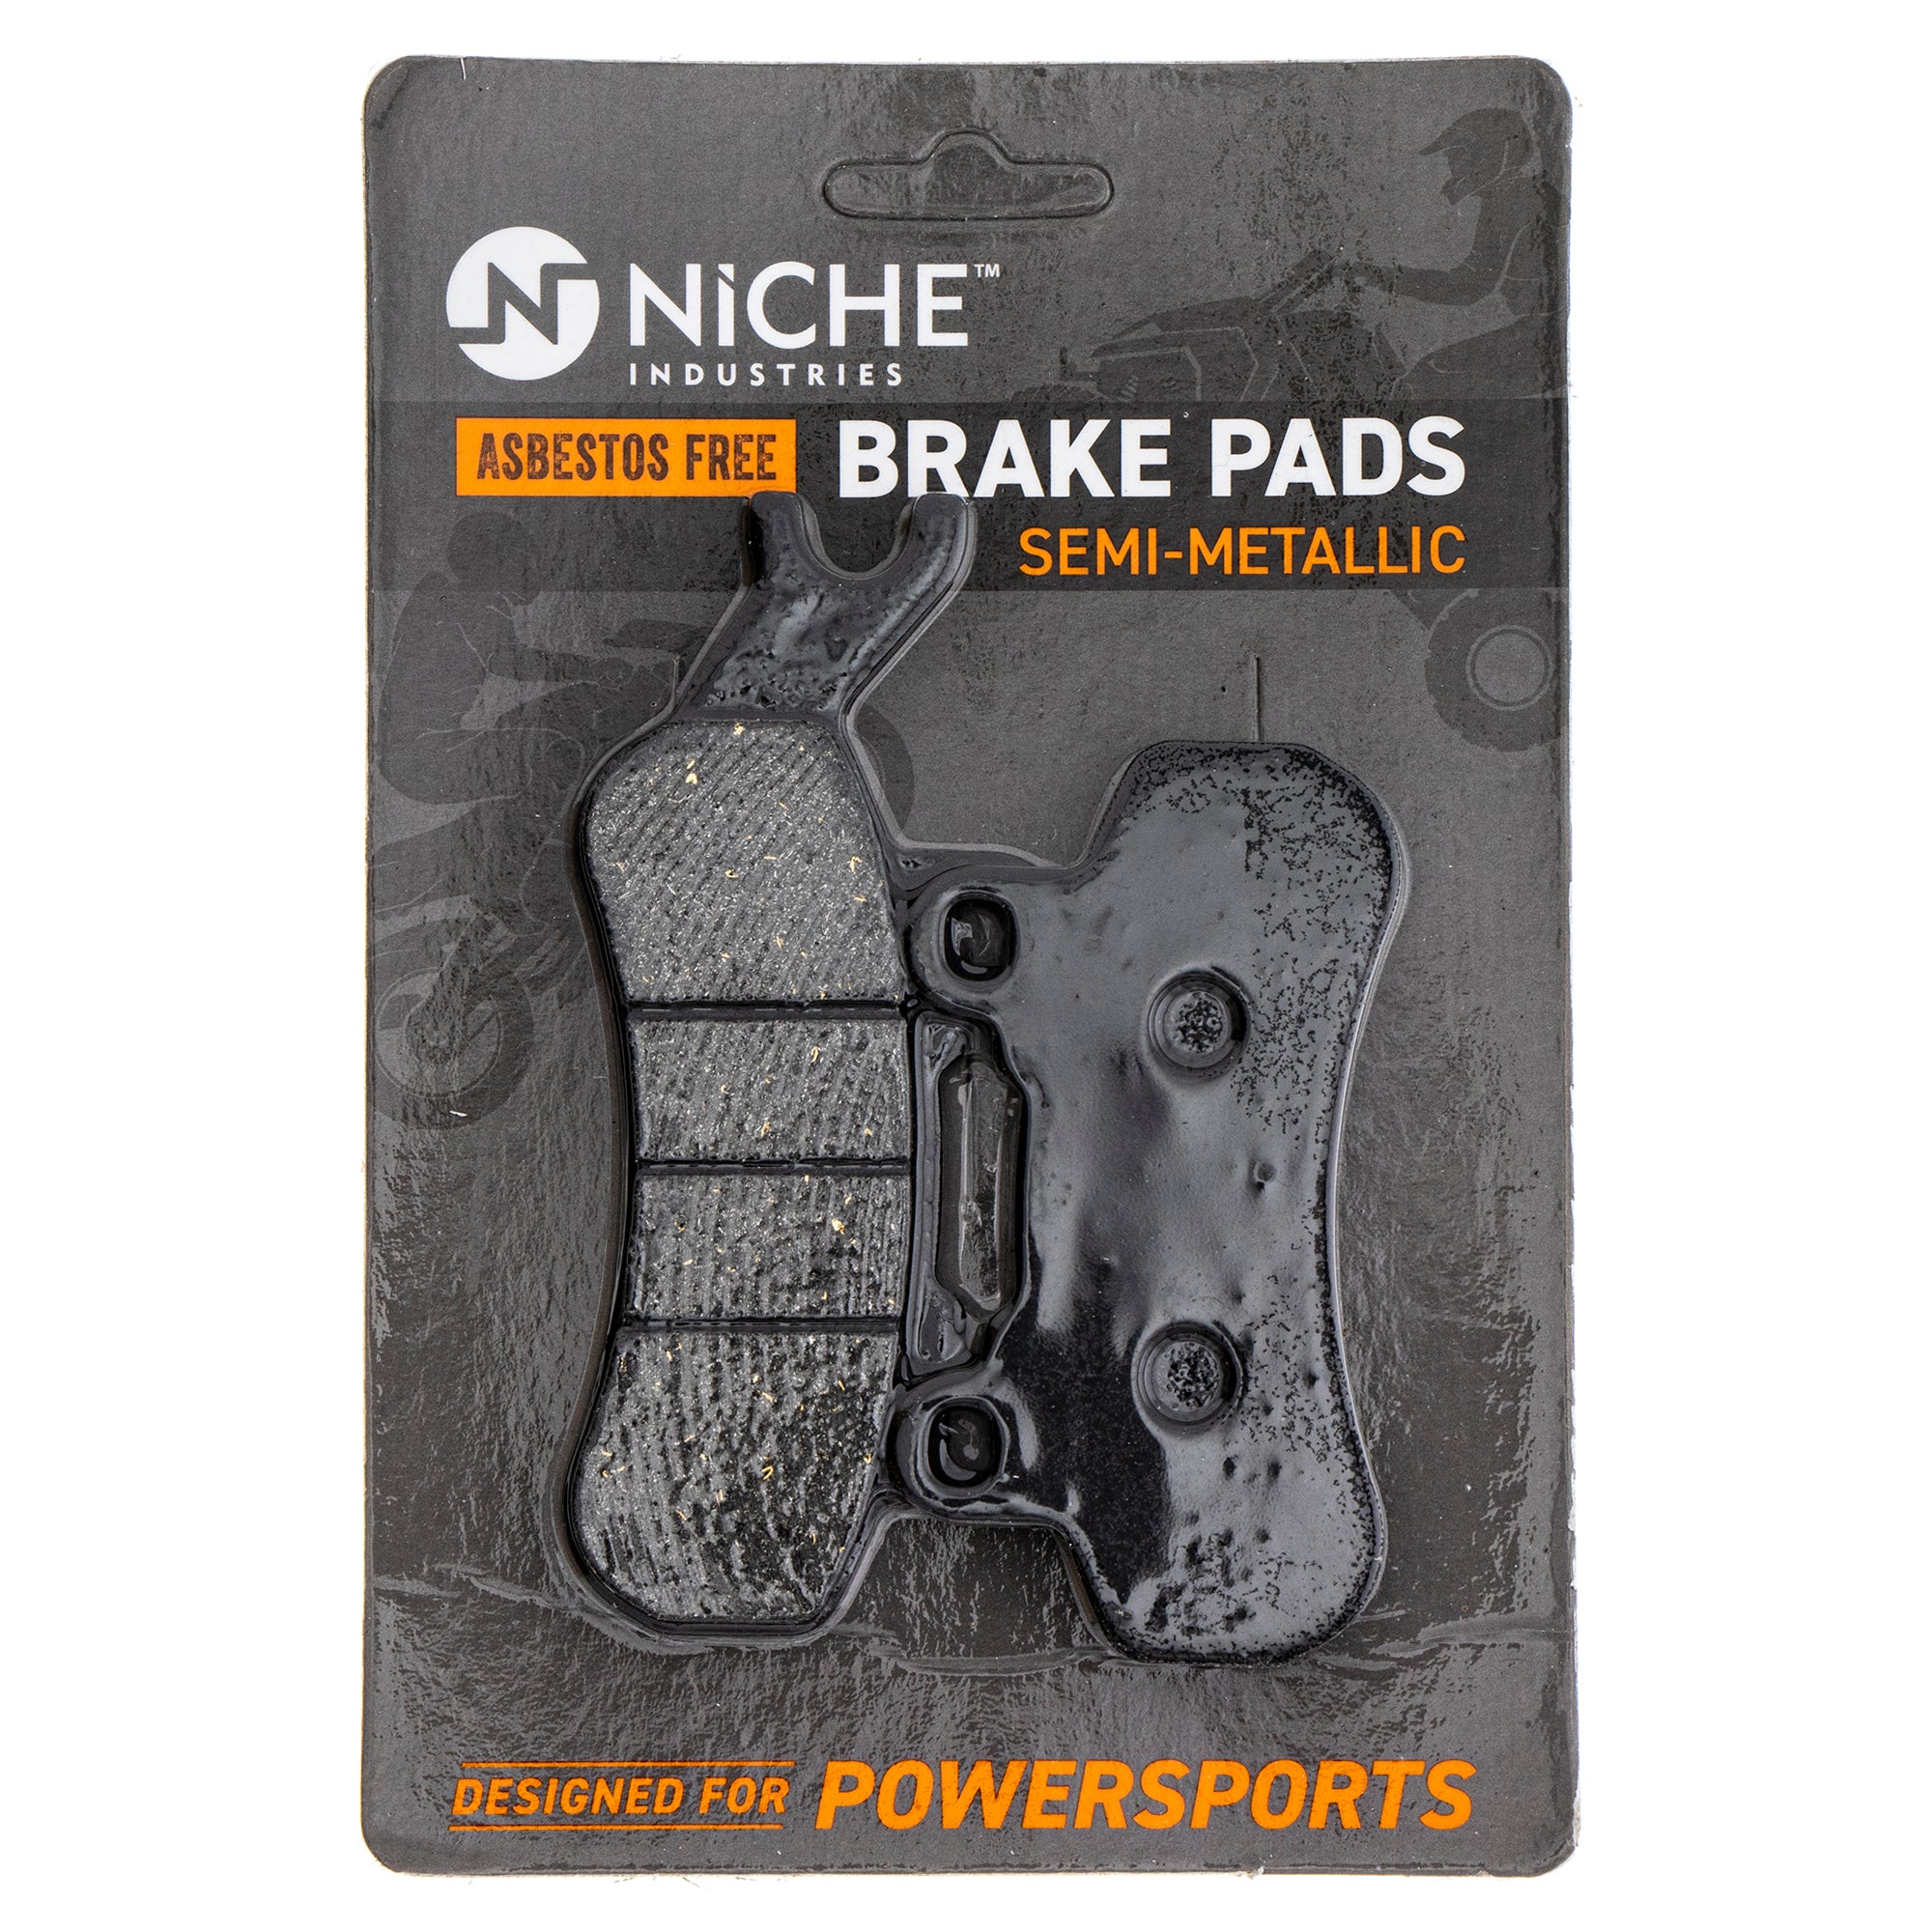 NICHE MK1002417 Brake Pad Set for BRP Can-Am Ski-Doo Sea-Doo